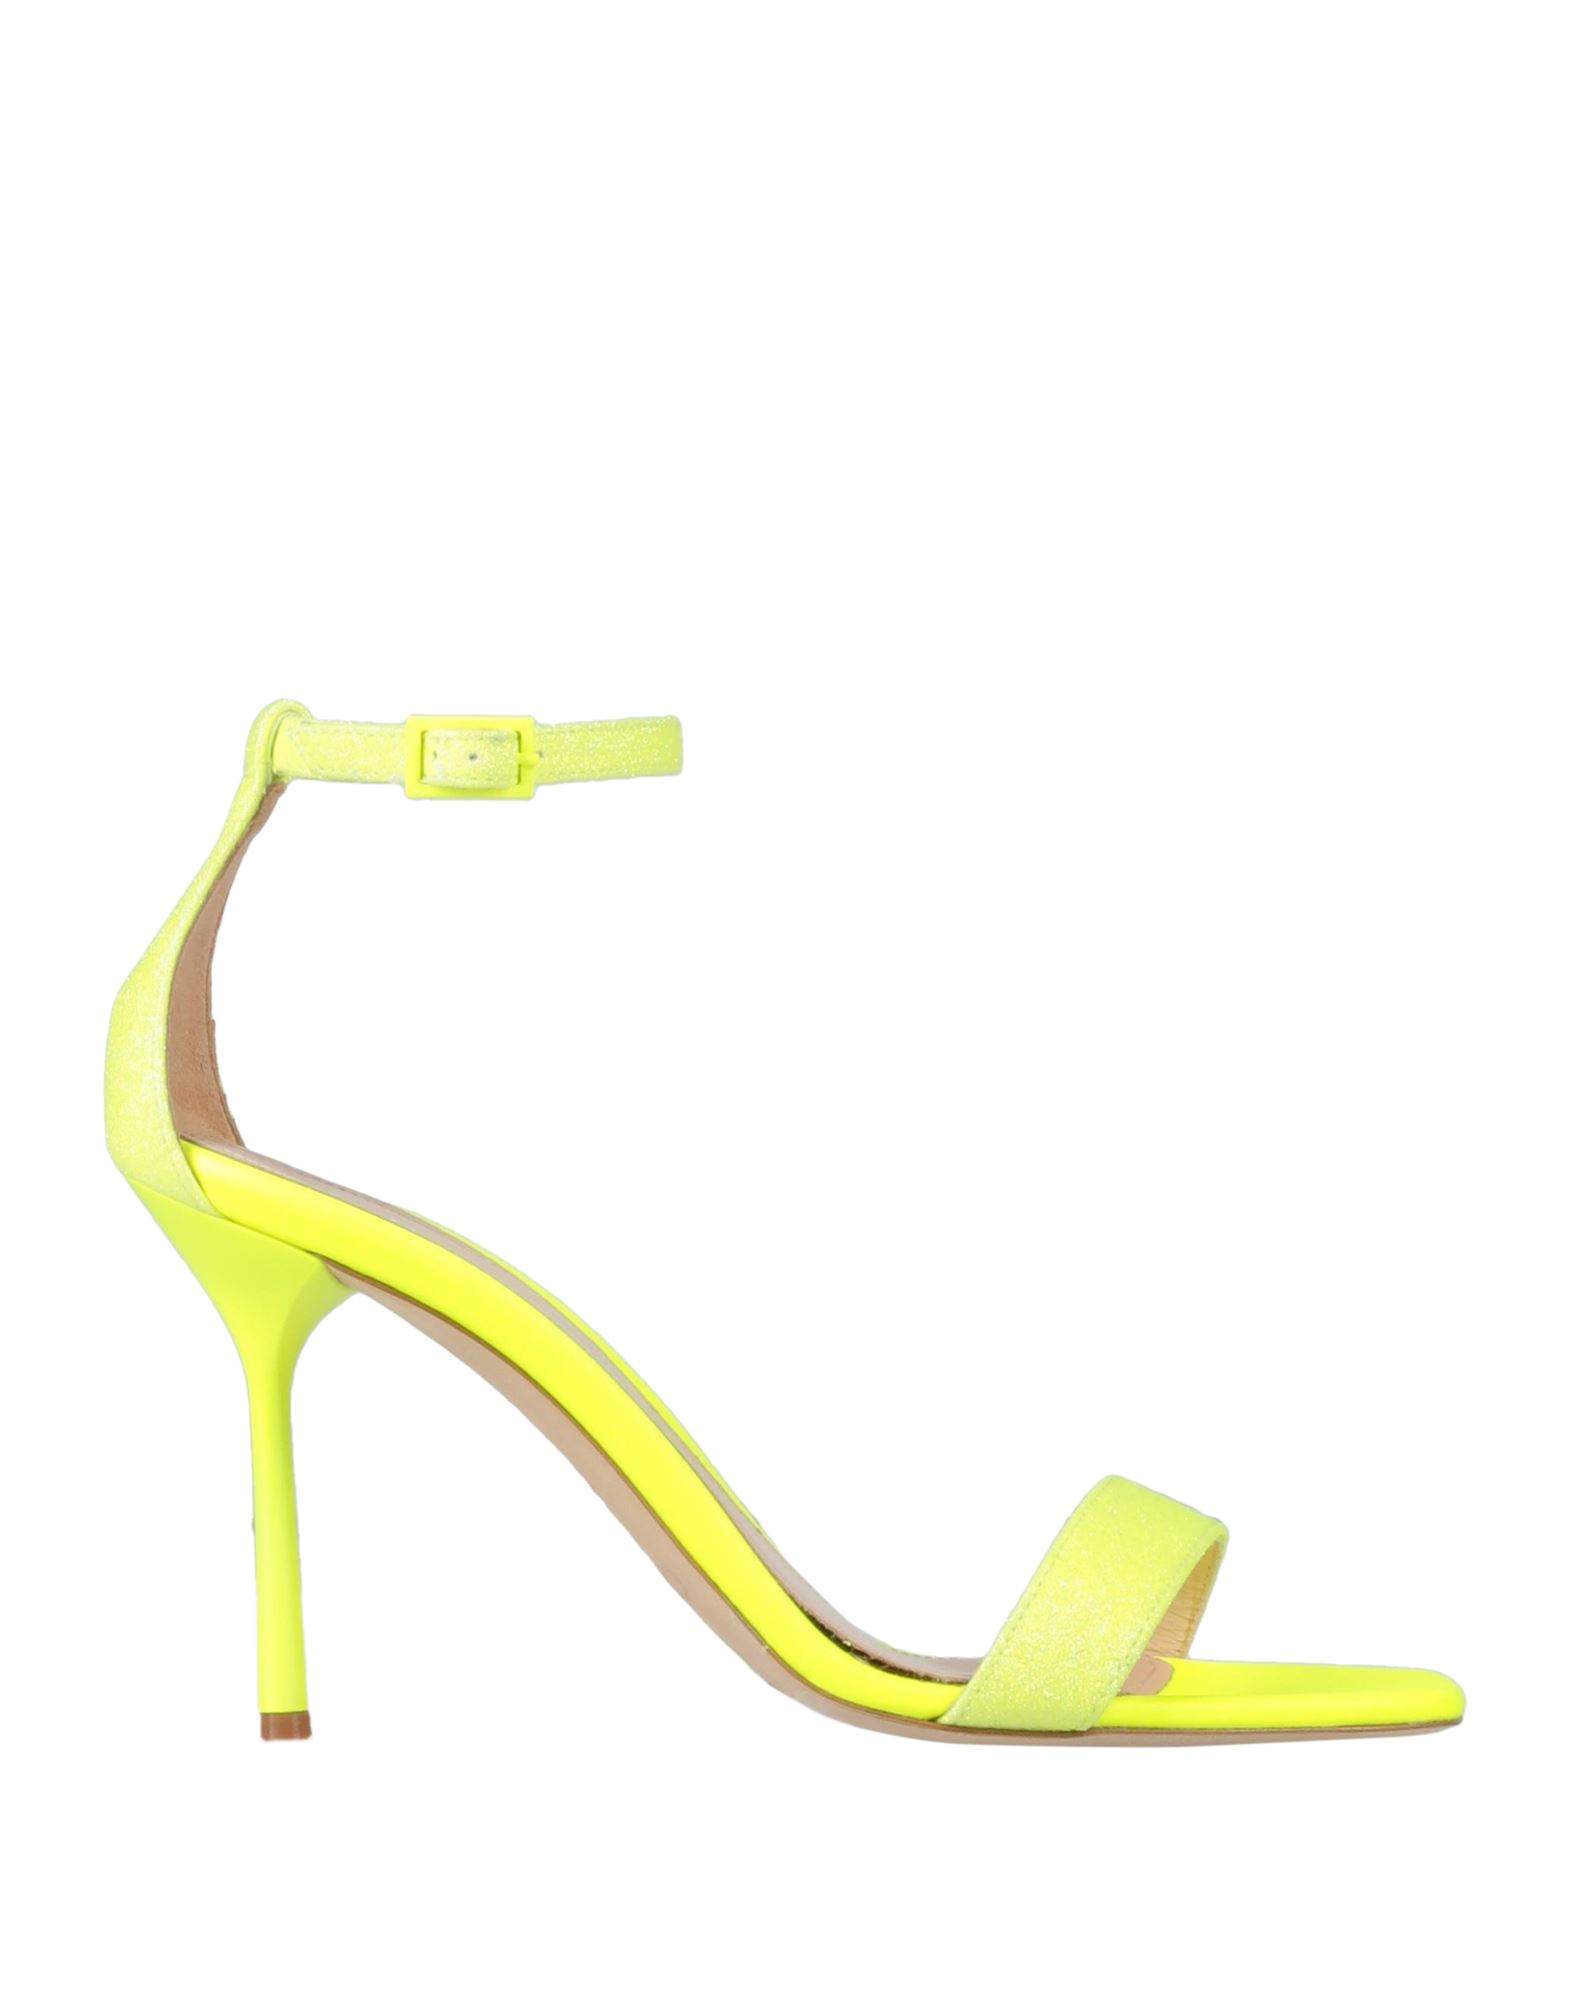 Liu •jo Sandals In Yellow